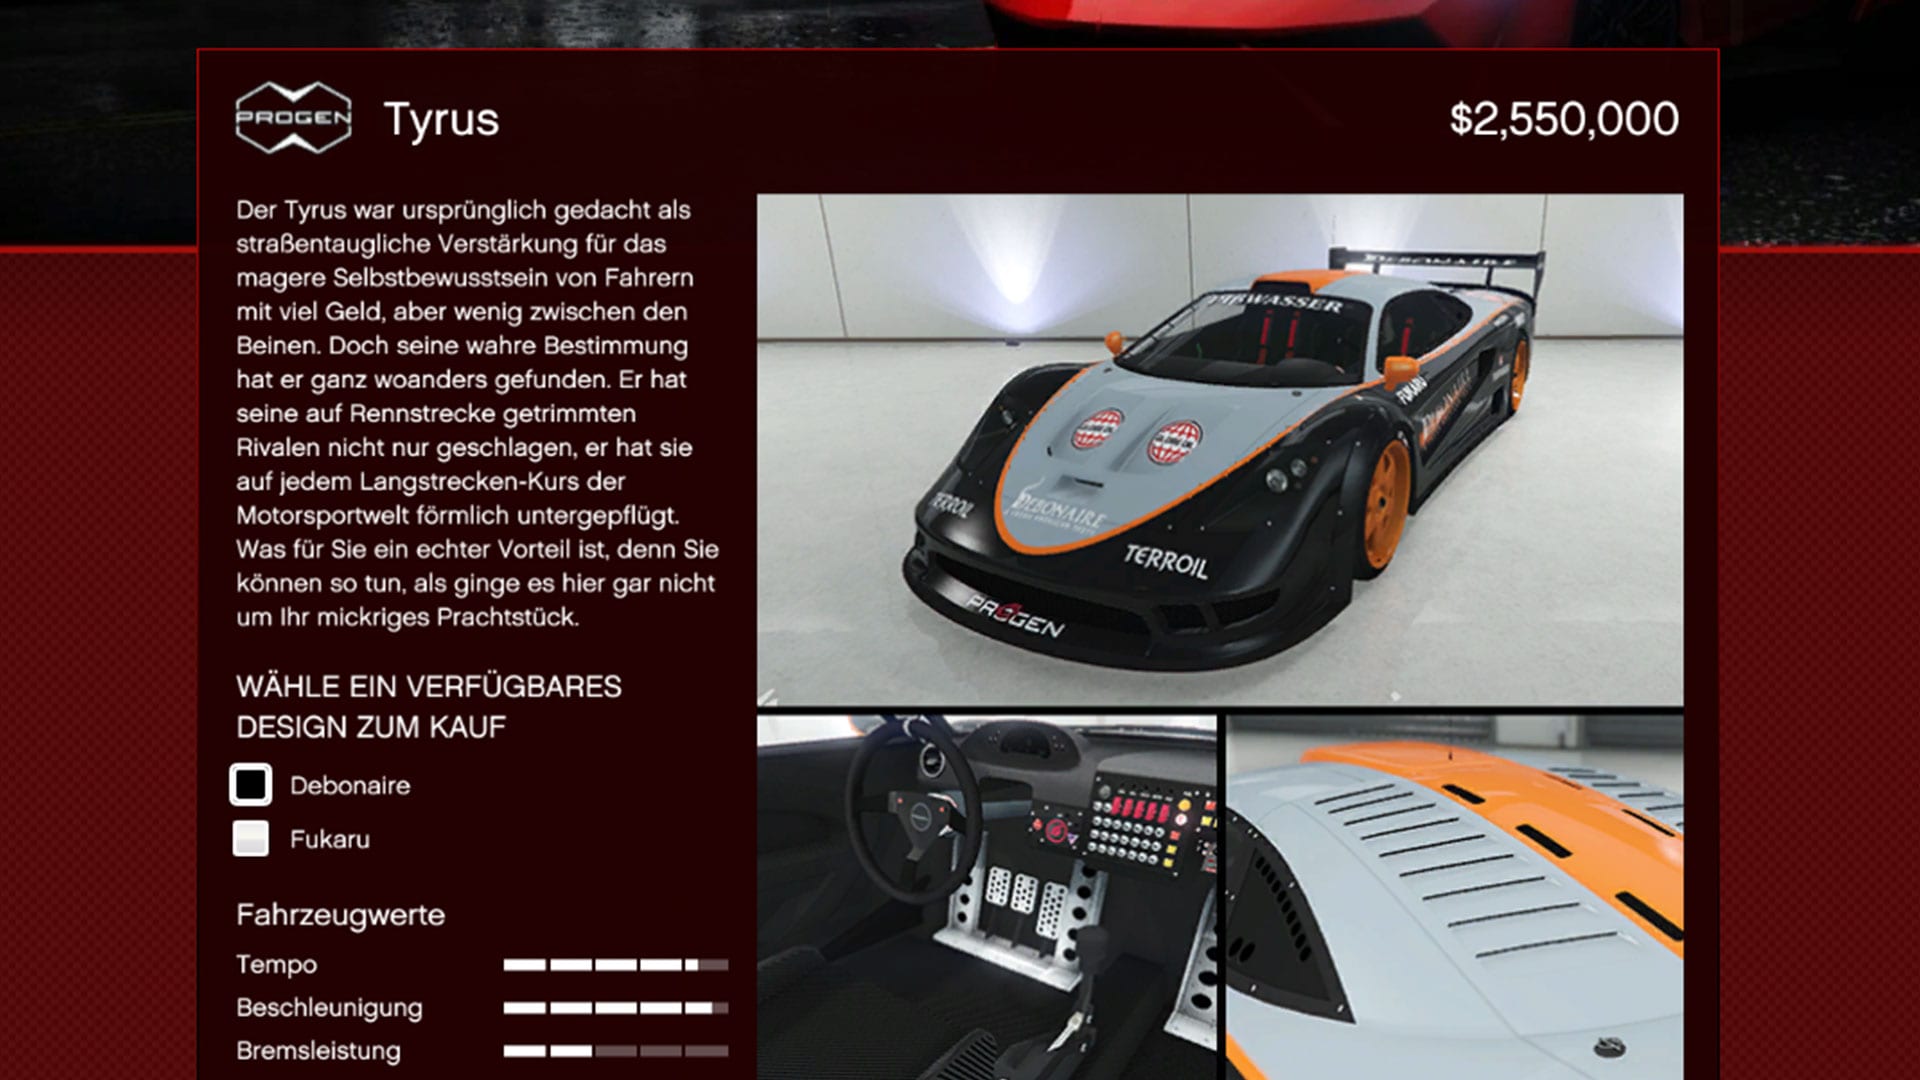 GTA Online - Progen Tyrus Legendary Motorsport